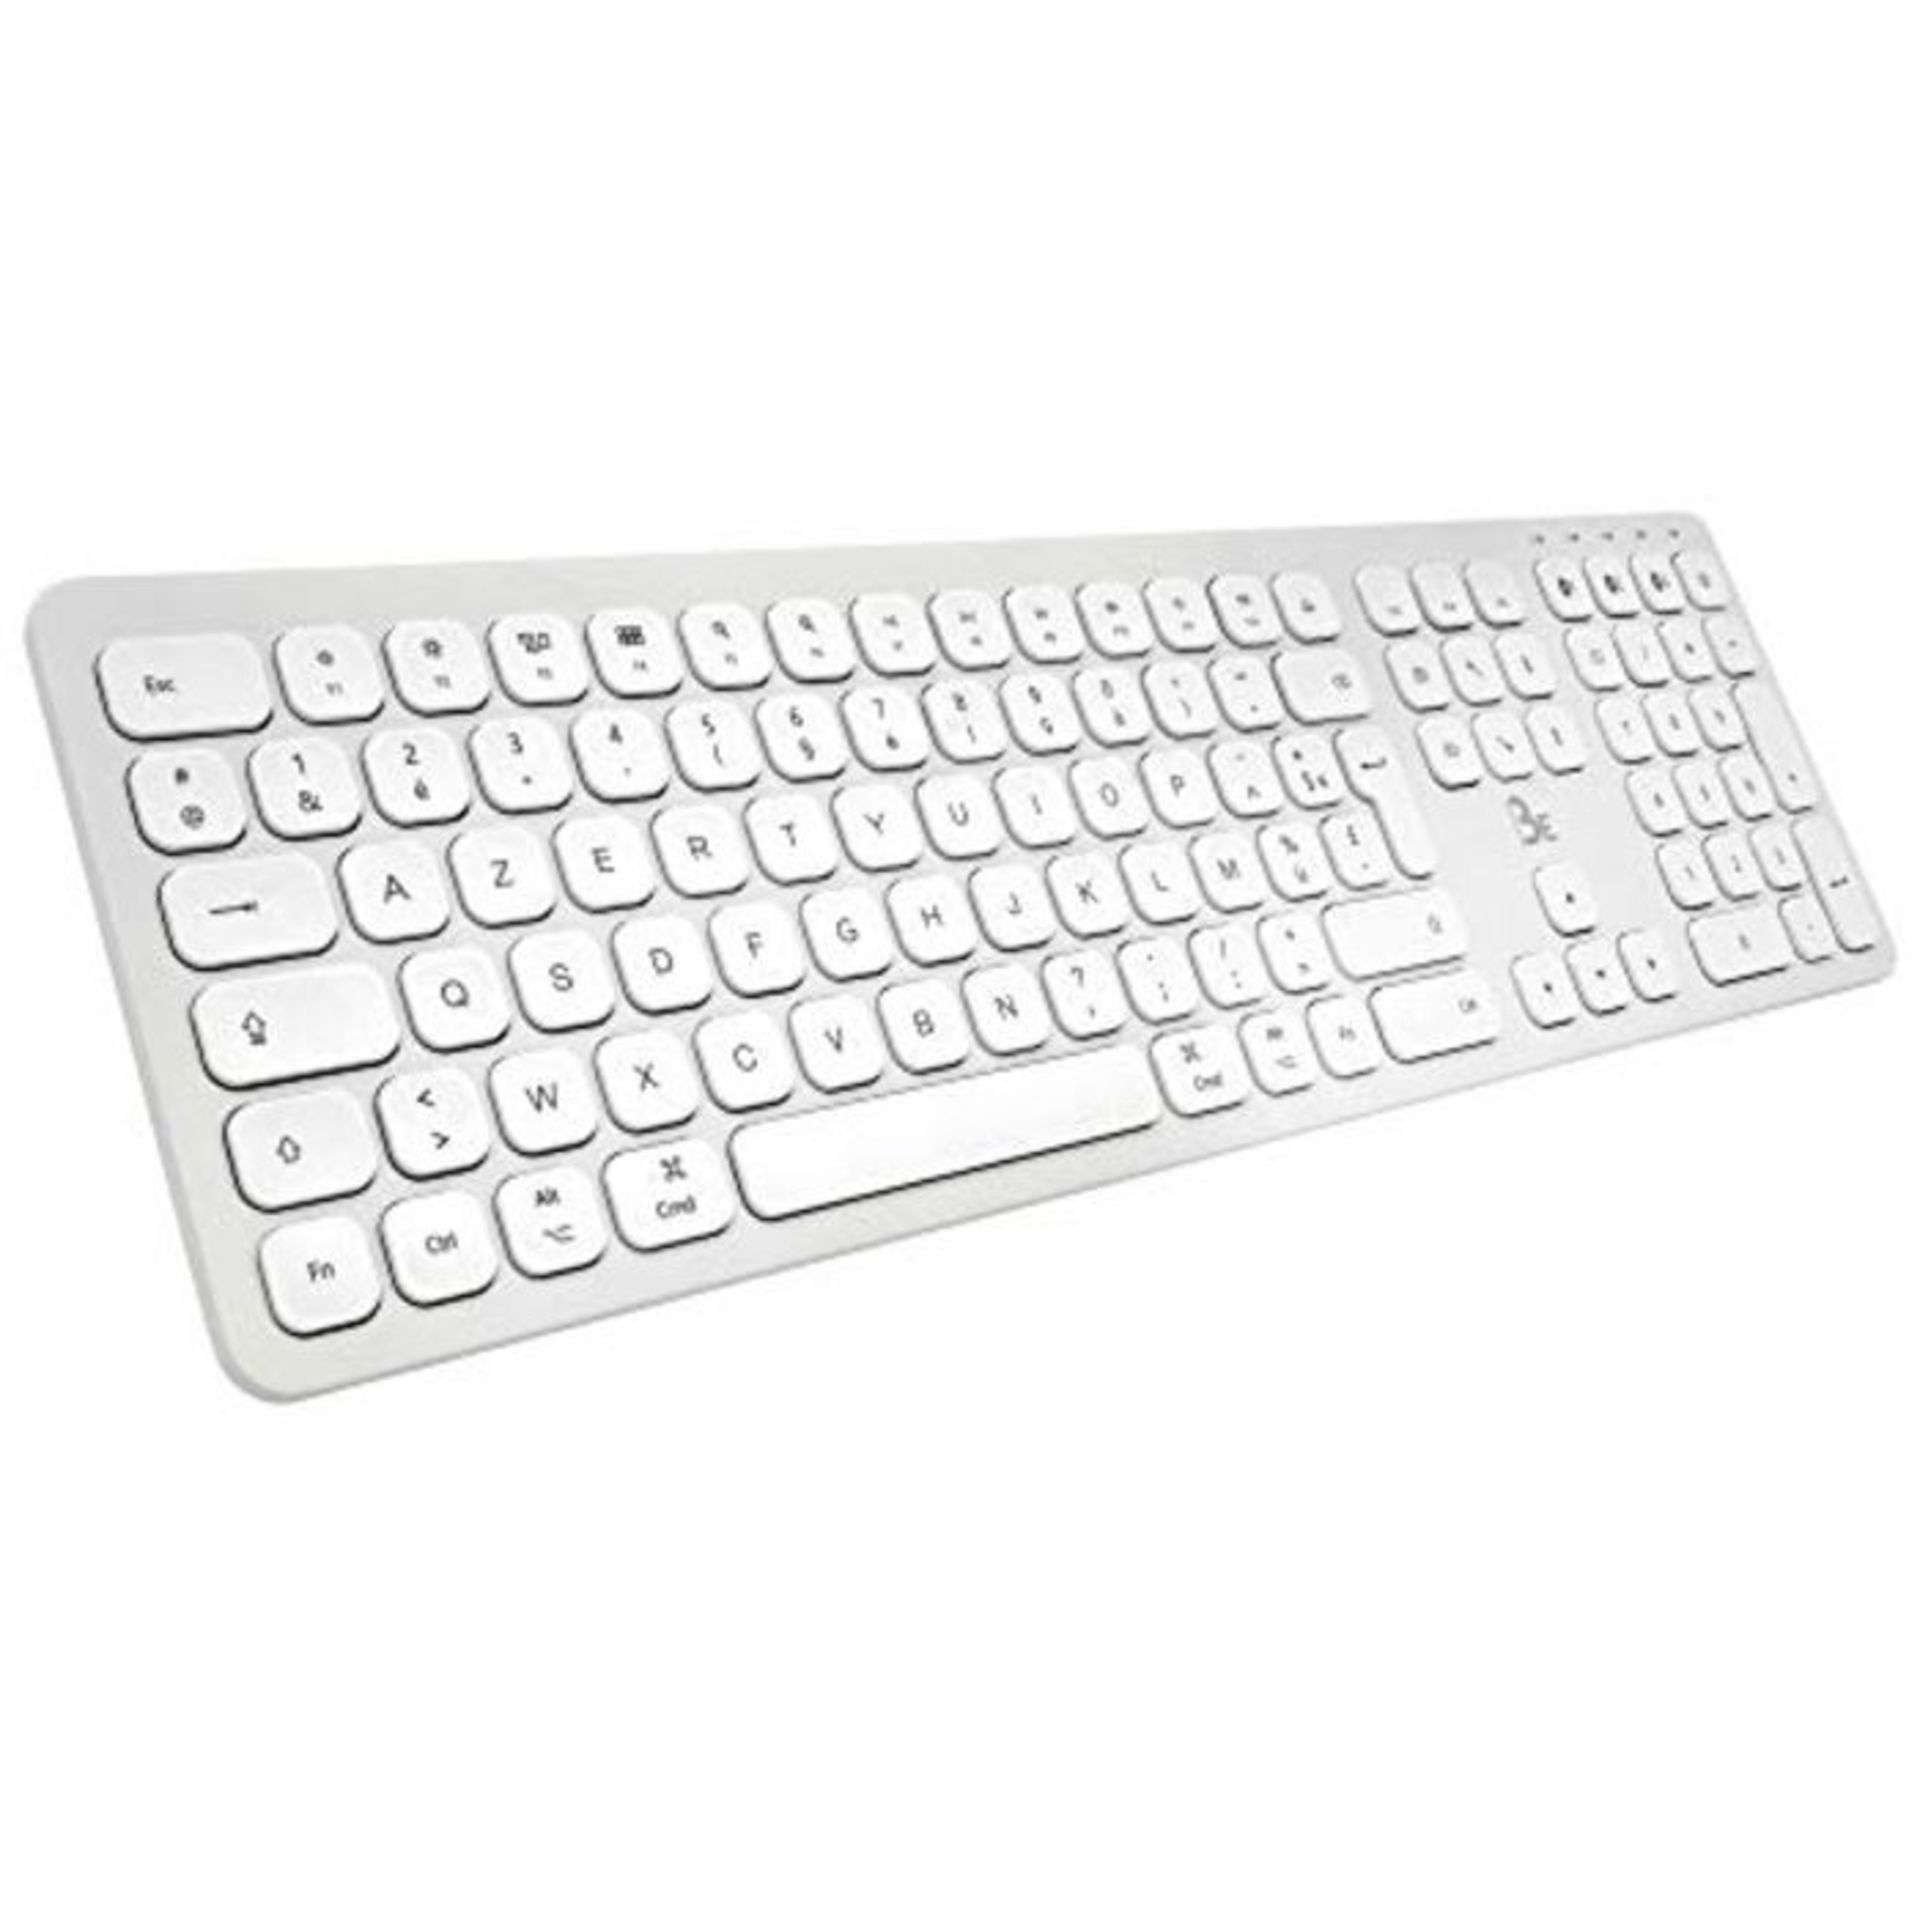 BlueElement Keyboard for Mac - Clavier Bluetooth pour Mac sans Fil Rechargeable - Desi